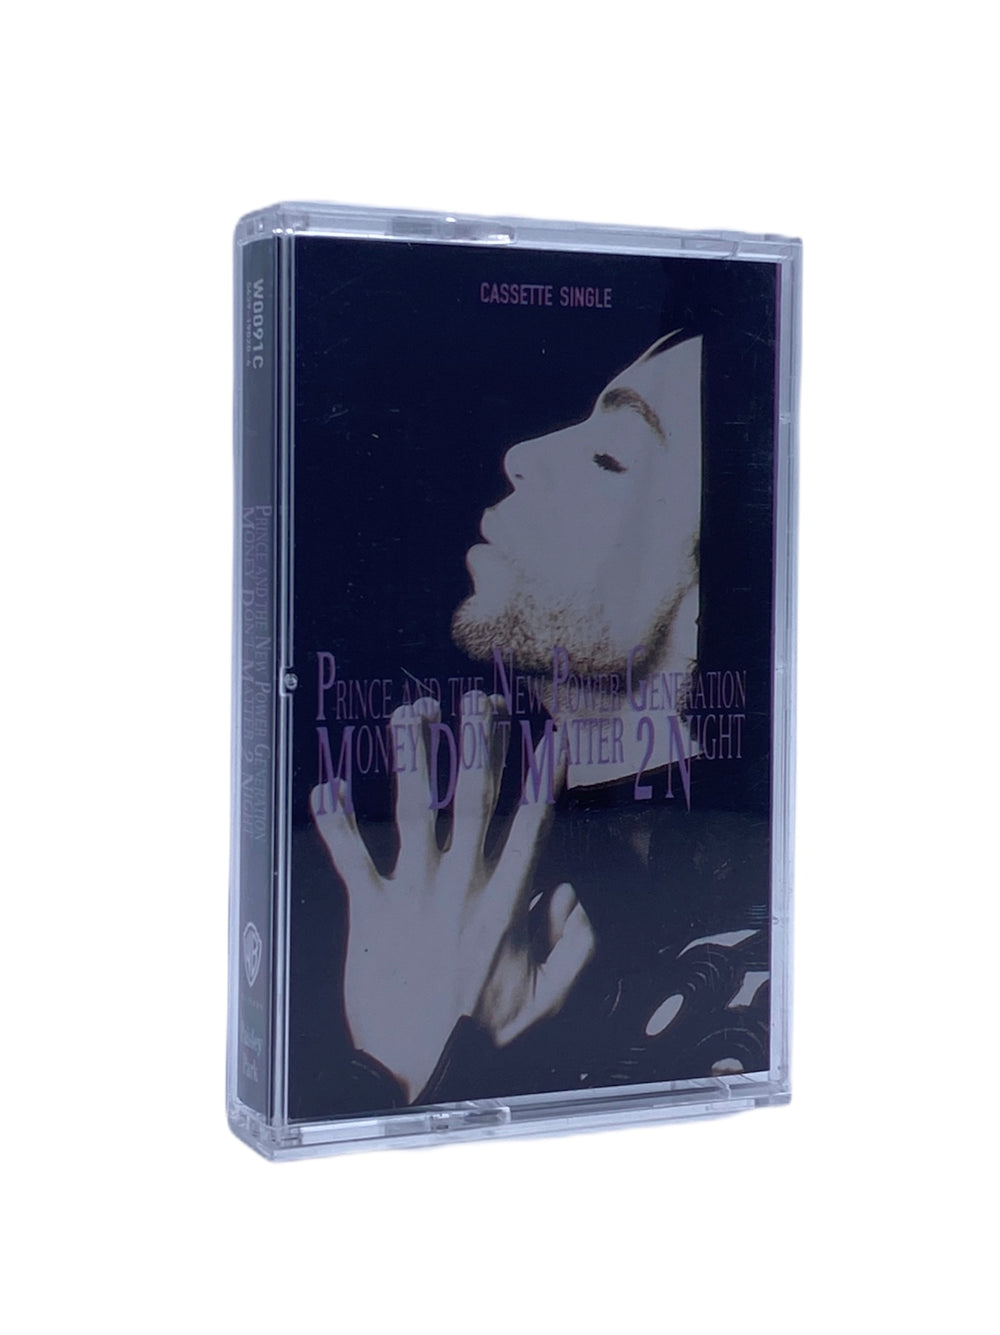 Prince – Money Don't Matter 2 Night 1992 Original Cassette Tape Single Cassingle